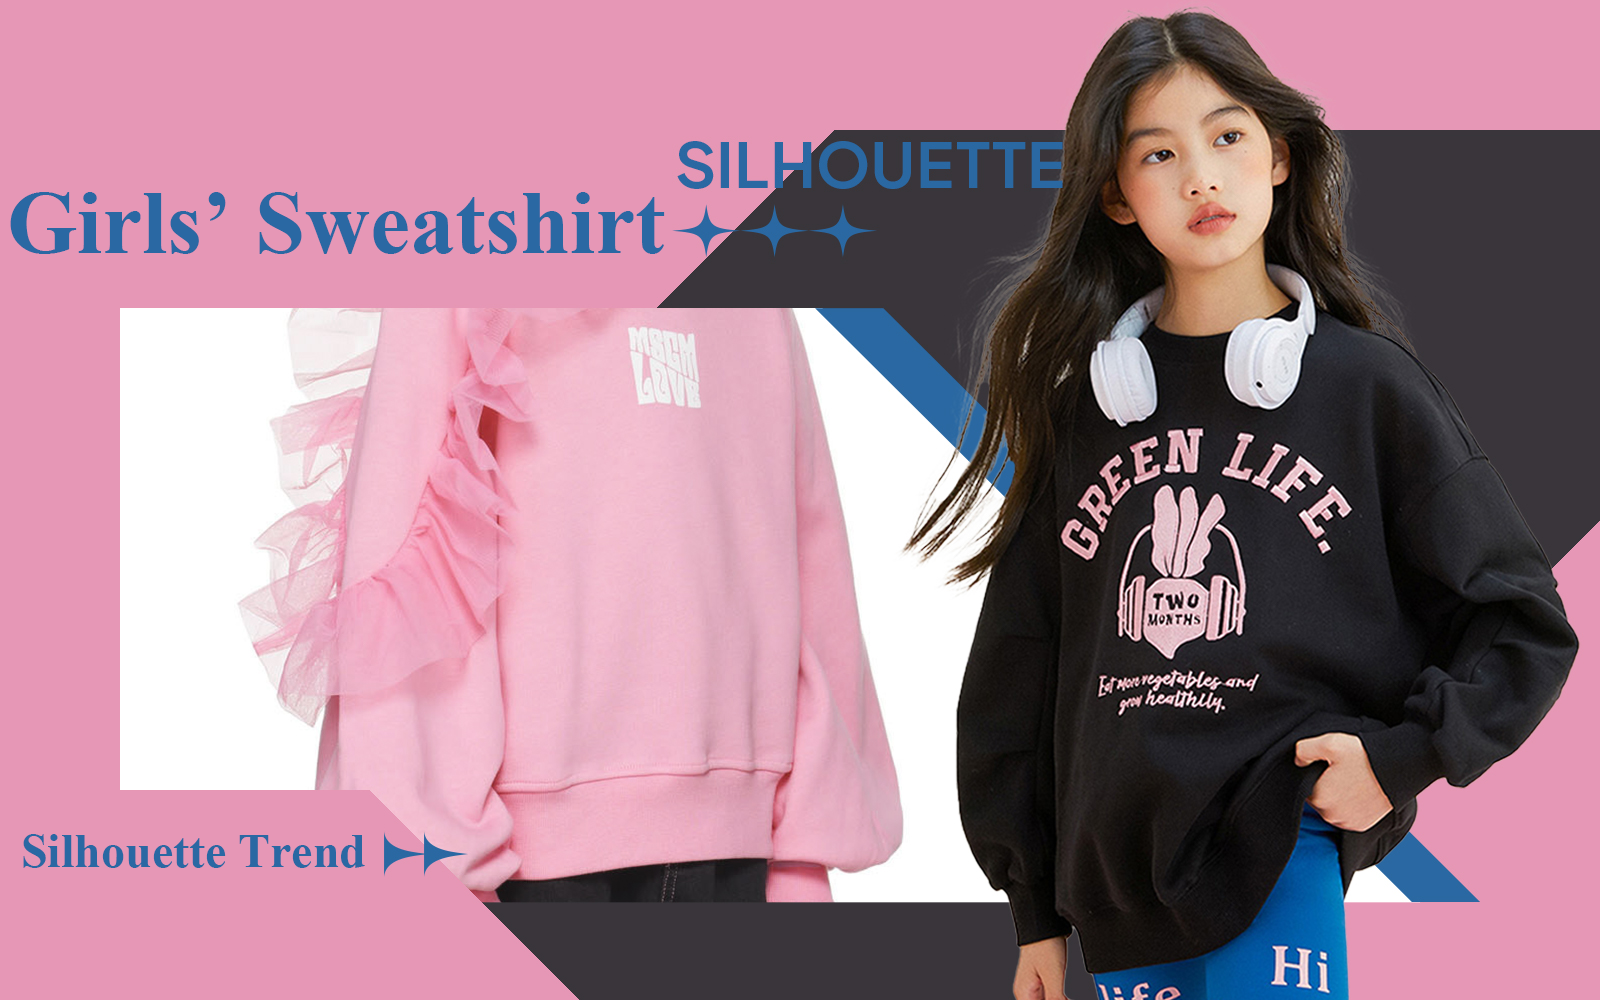 Sweatshirt -- The Silhouette Trend for Girlswear